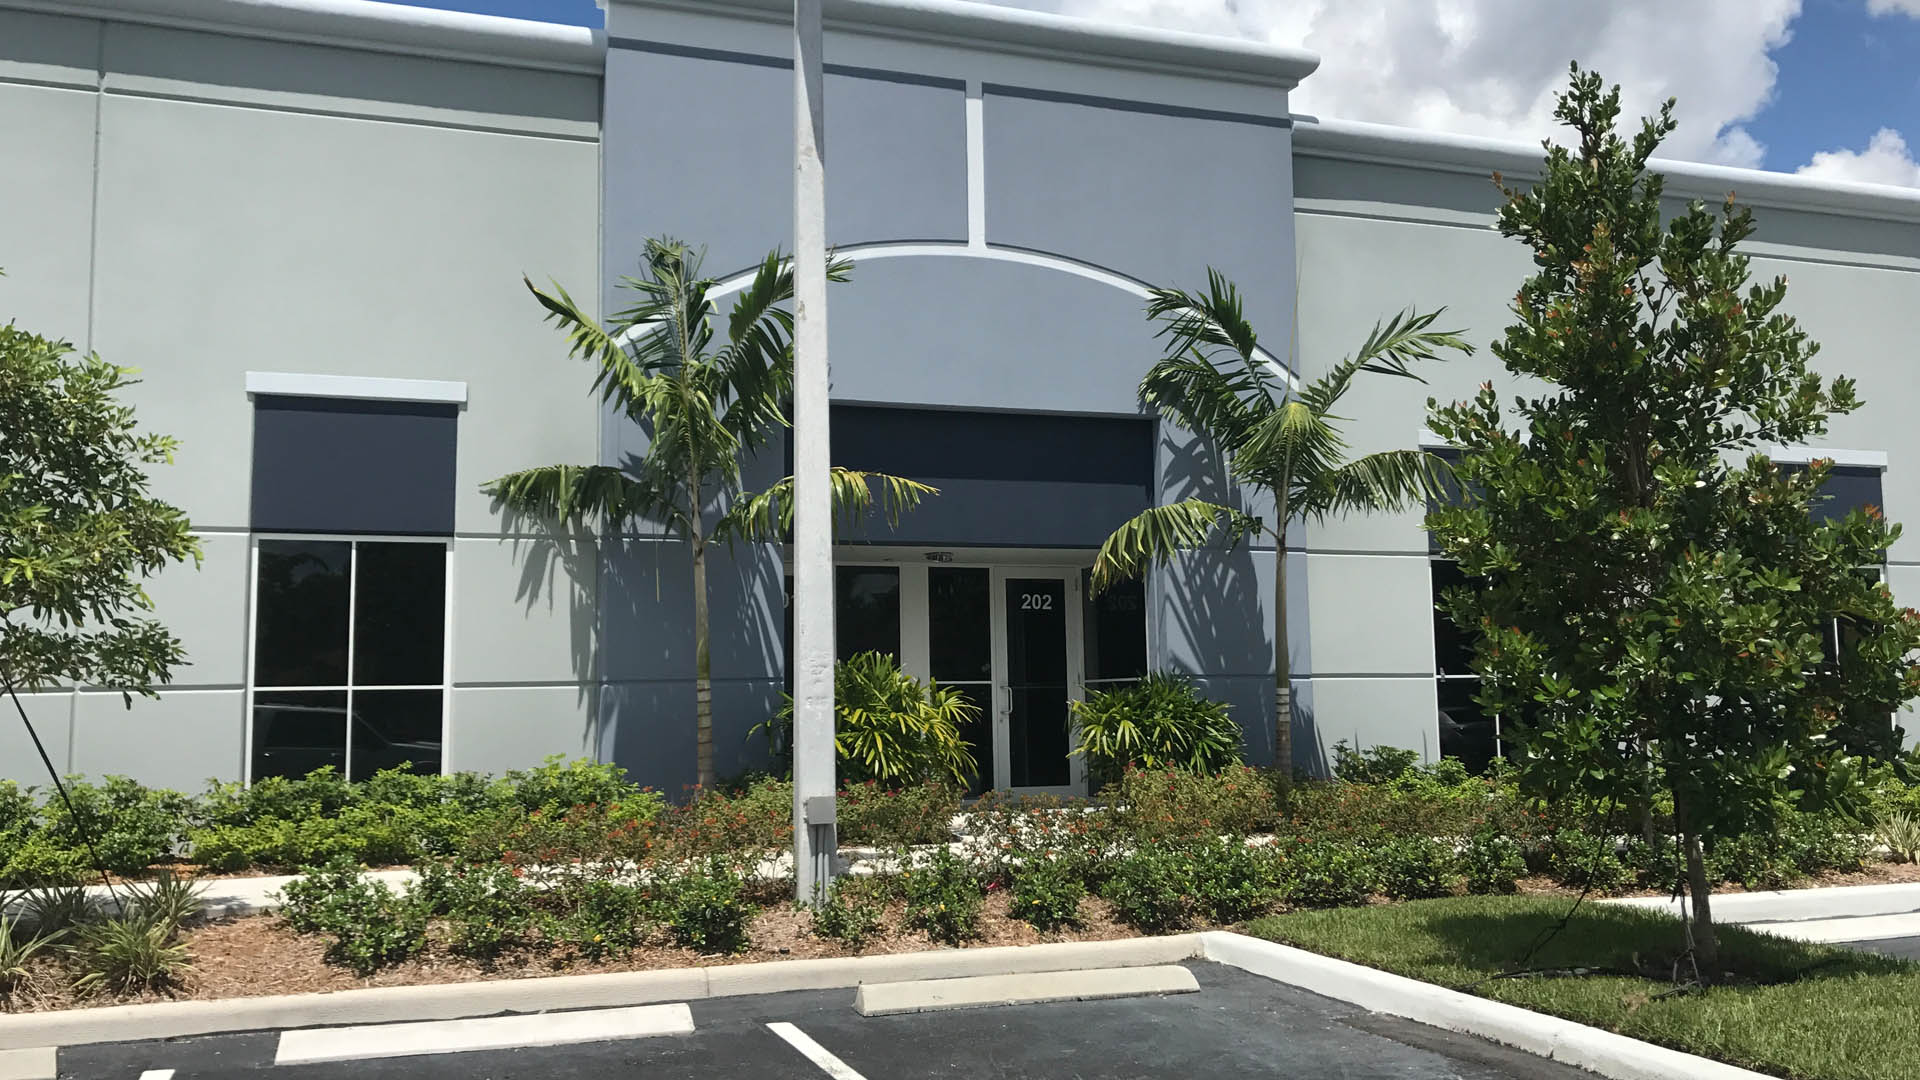 New landscape design and installation for business in Davie, FL.